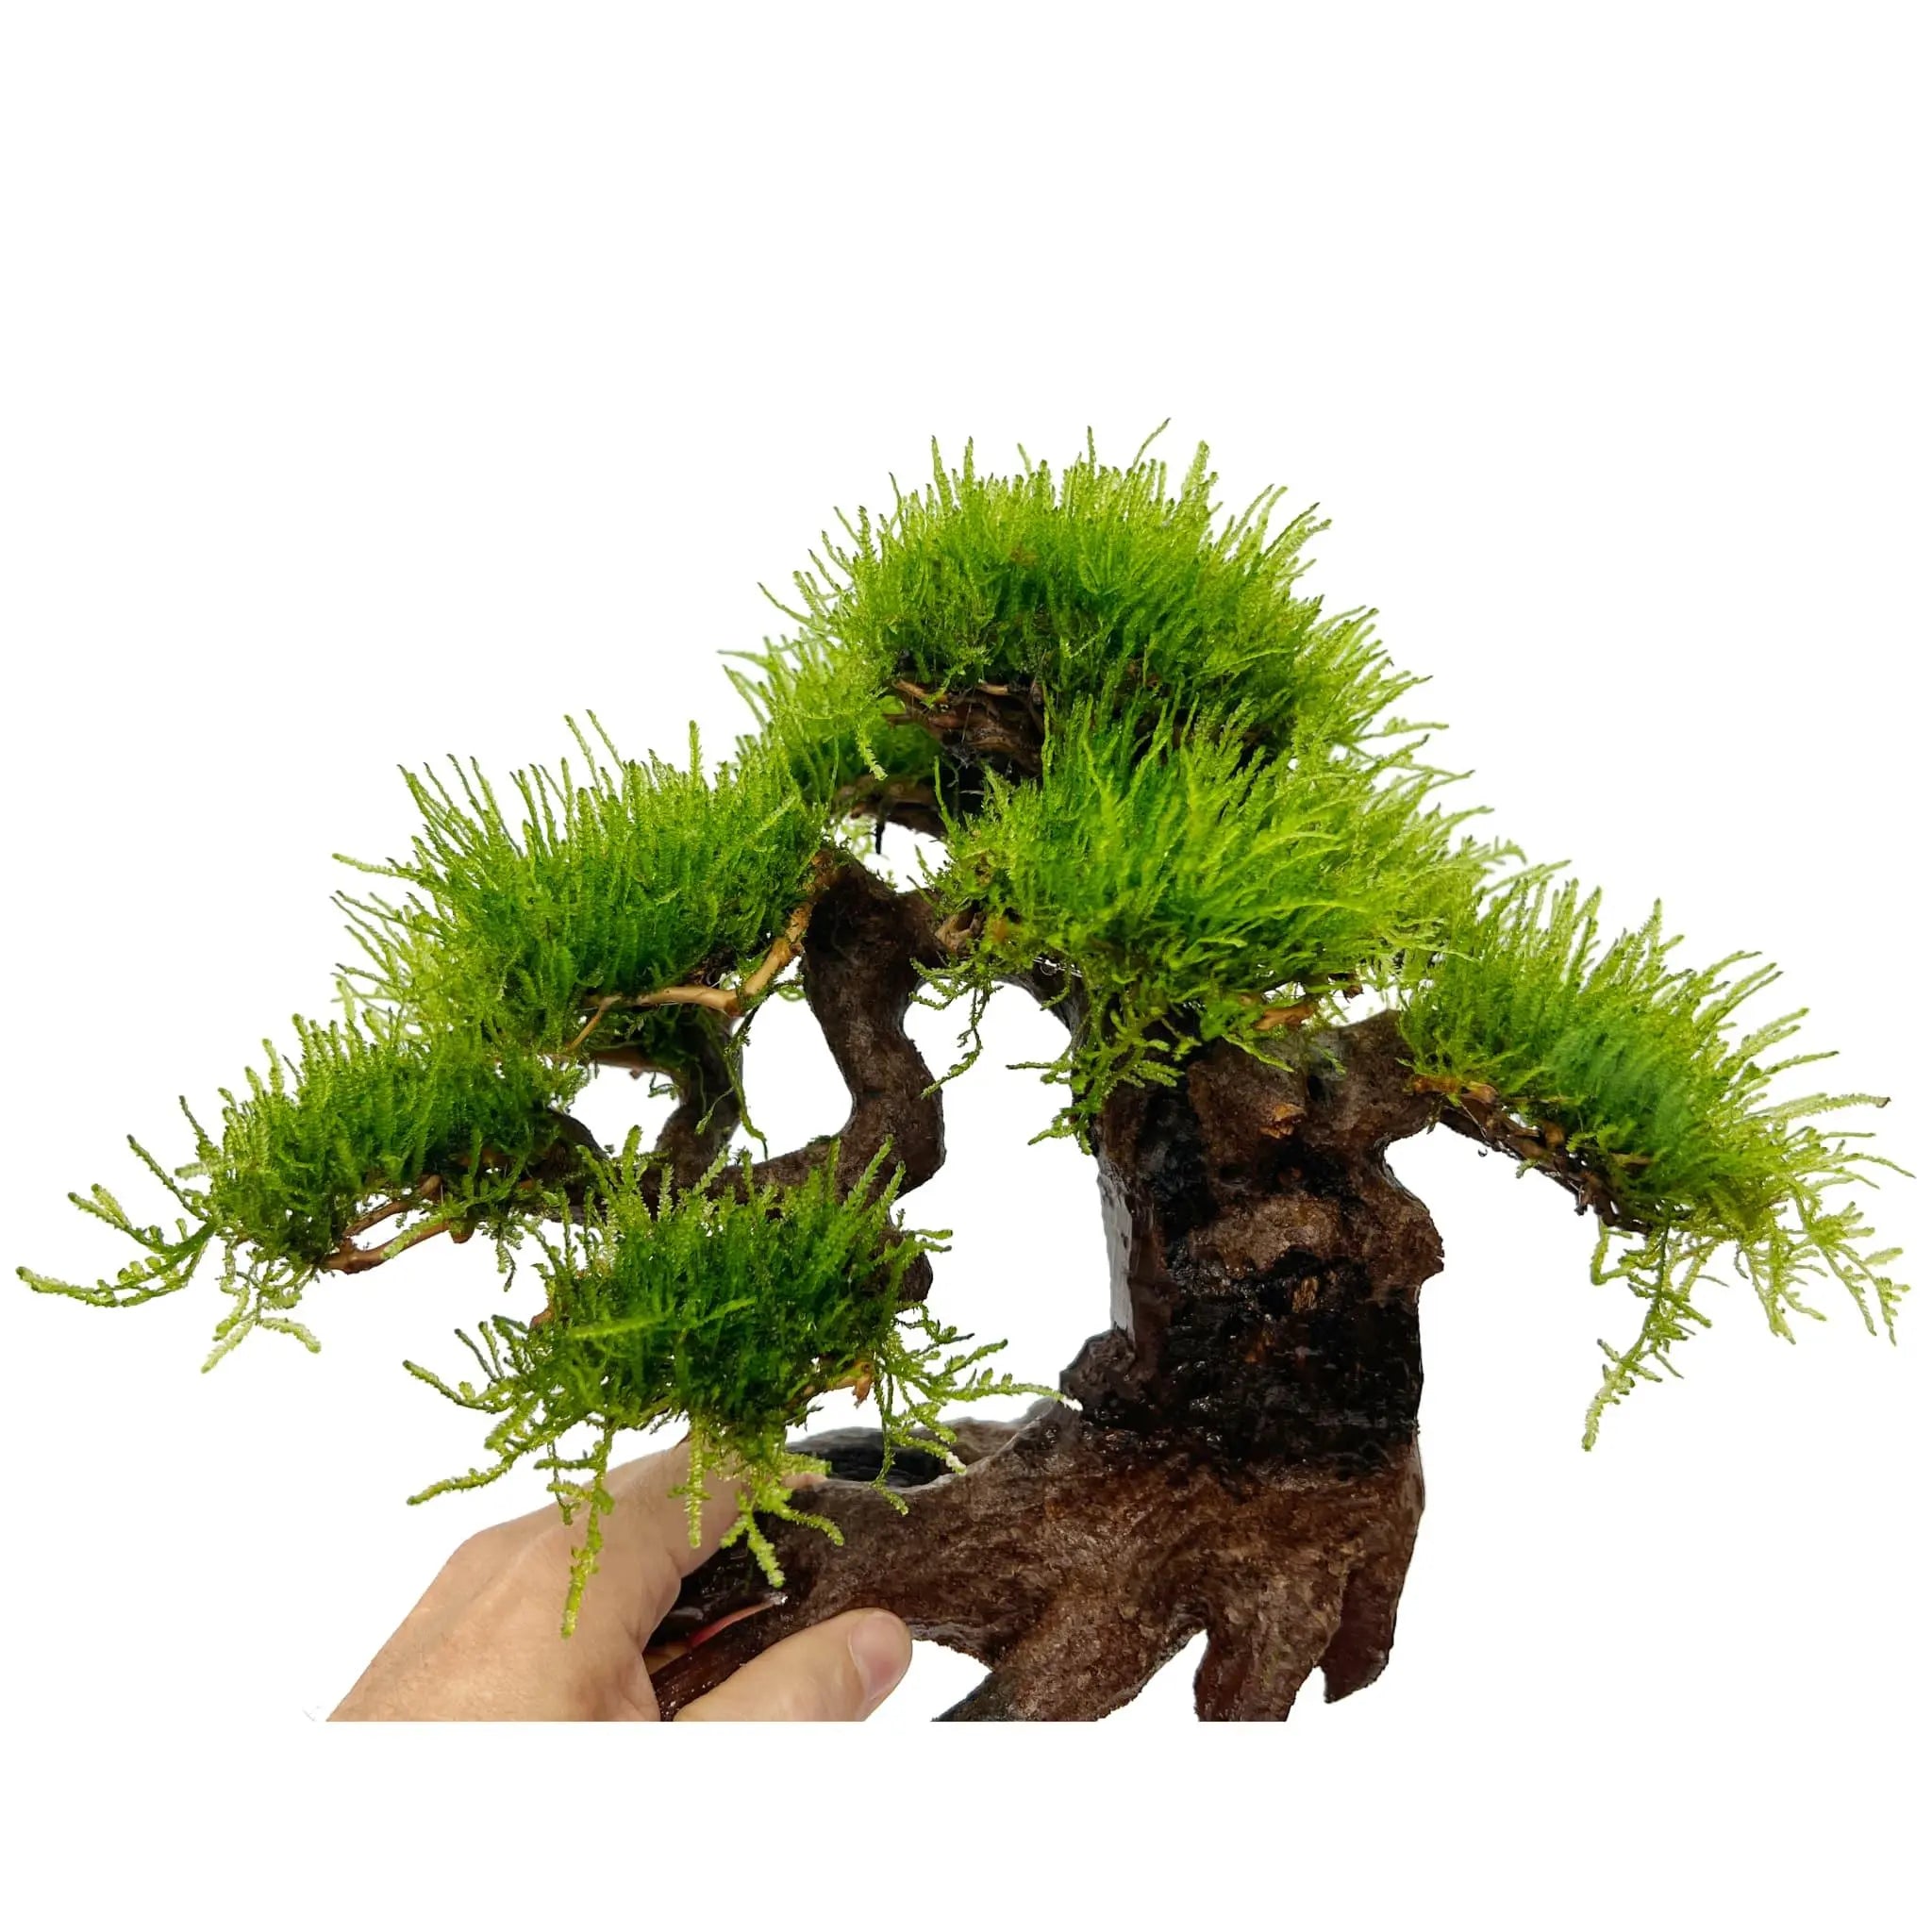 Bonsai Tree with Moss - Large Size - Aqua Essentials